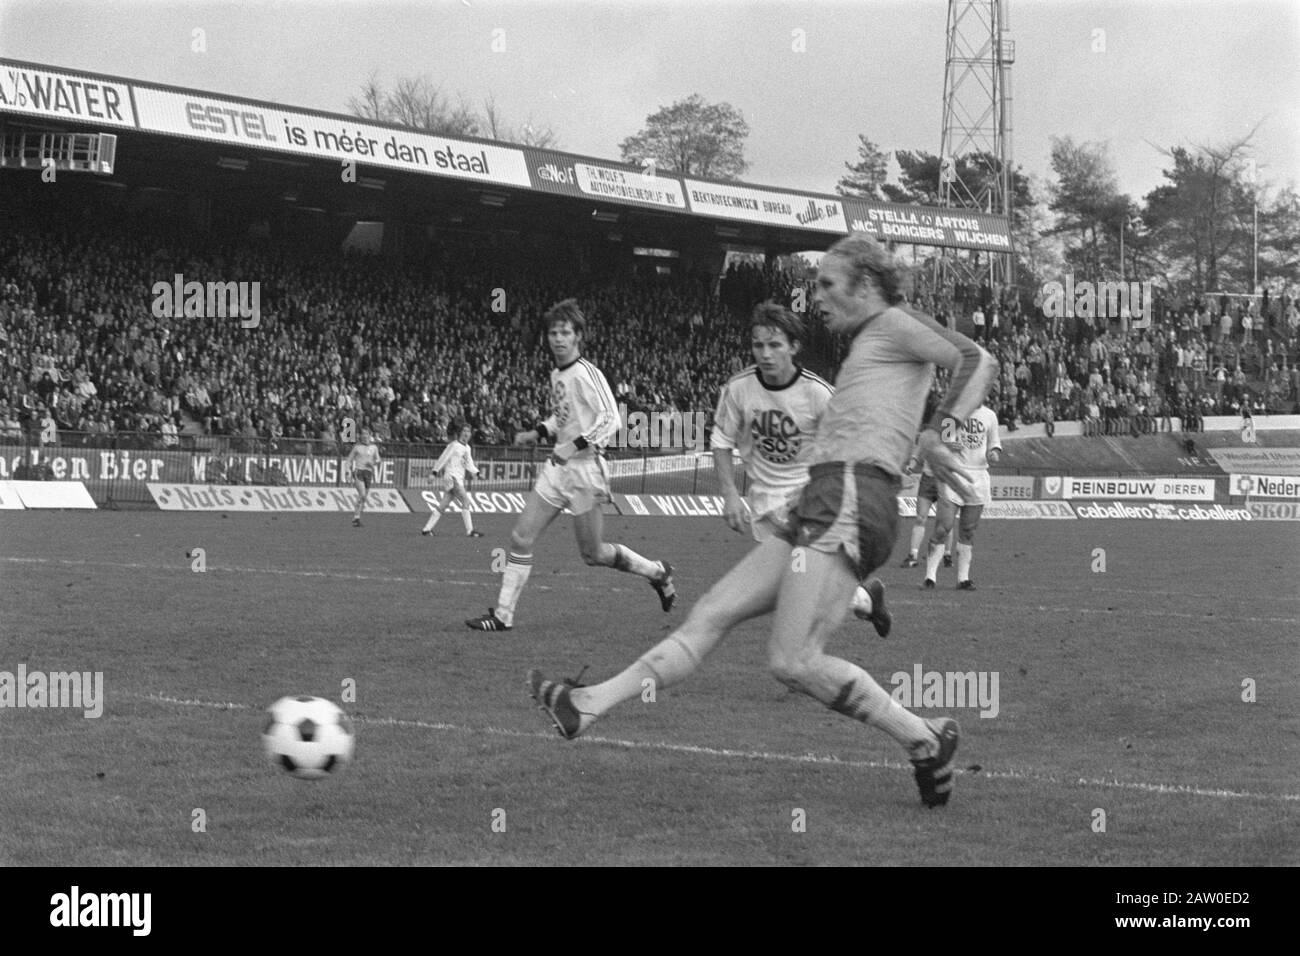 Nec V Ajax 0 1 Game Moments Date November 6 1977 Keywords Sport Football Institution Name Ajax Nec Stock Photo Alamy